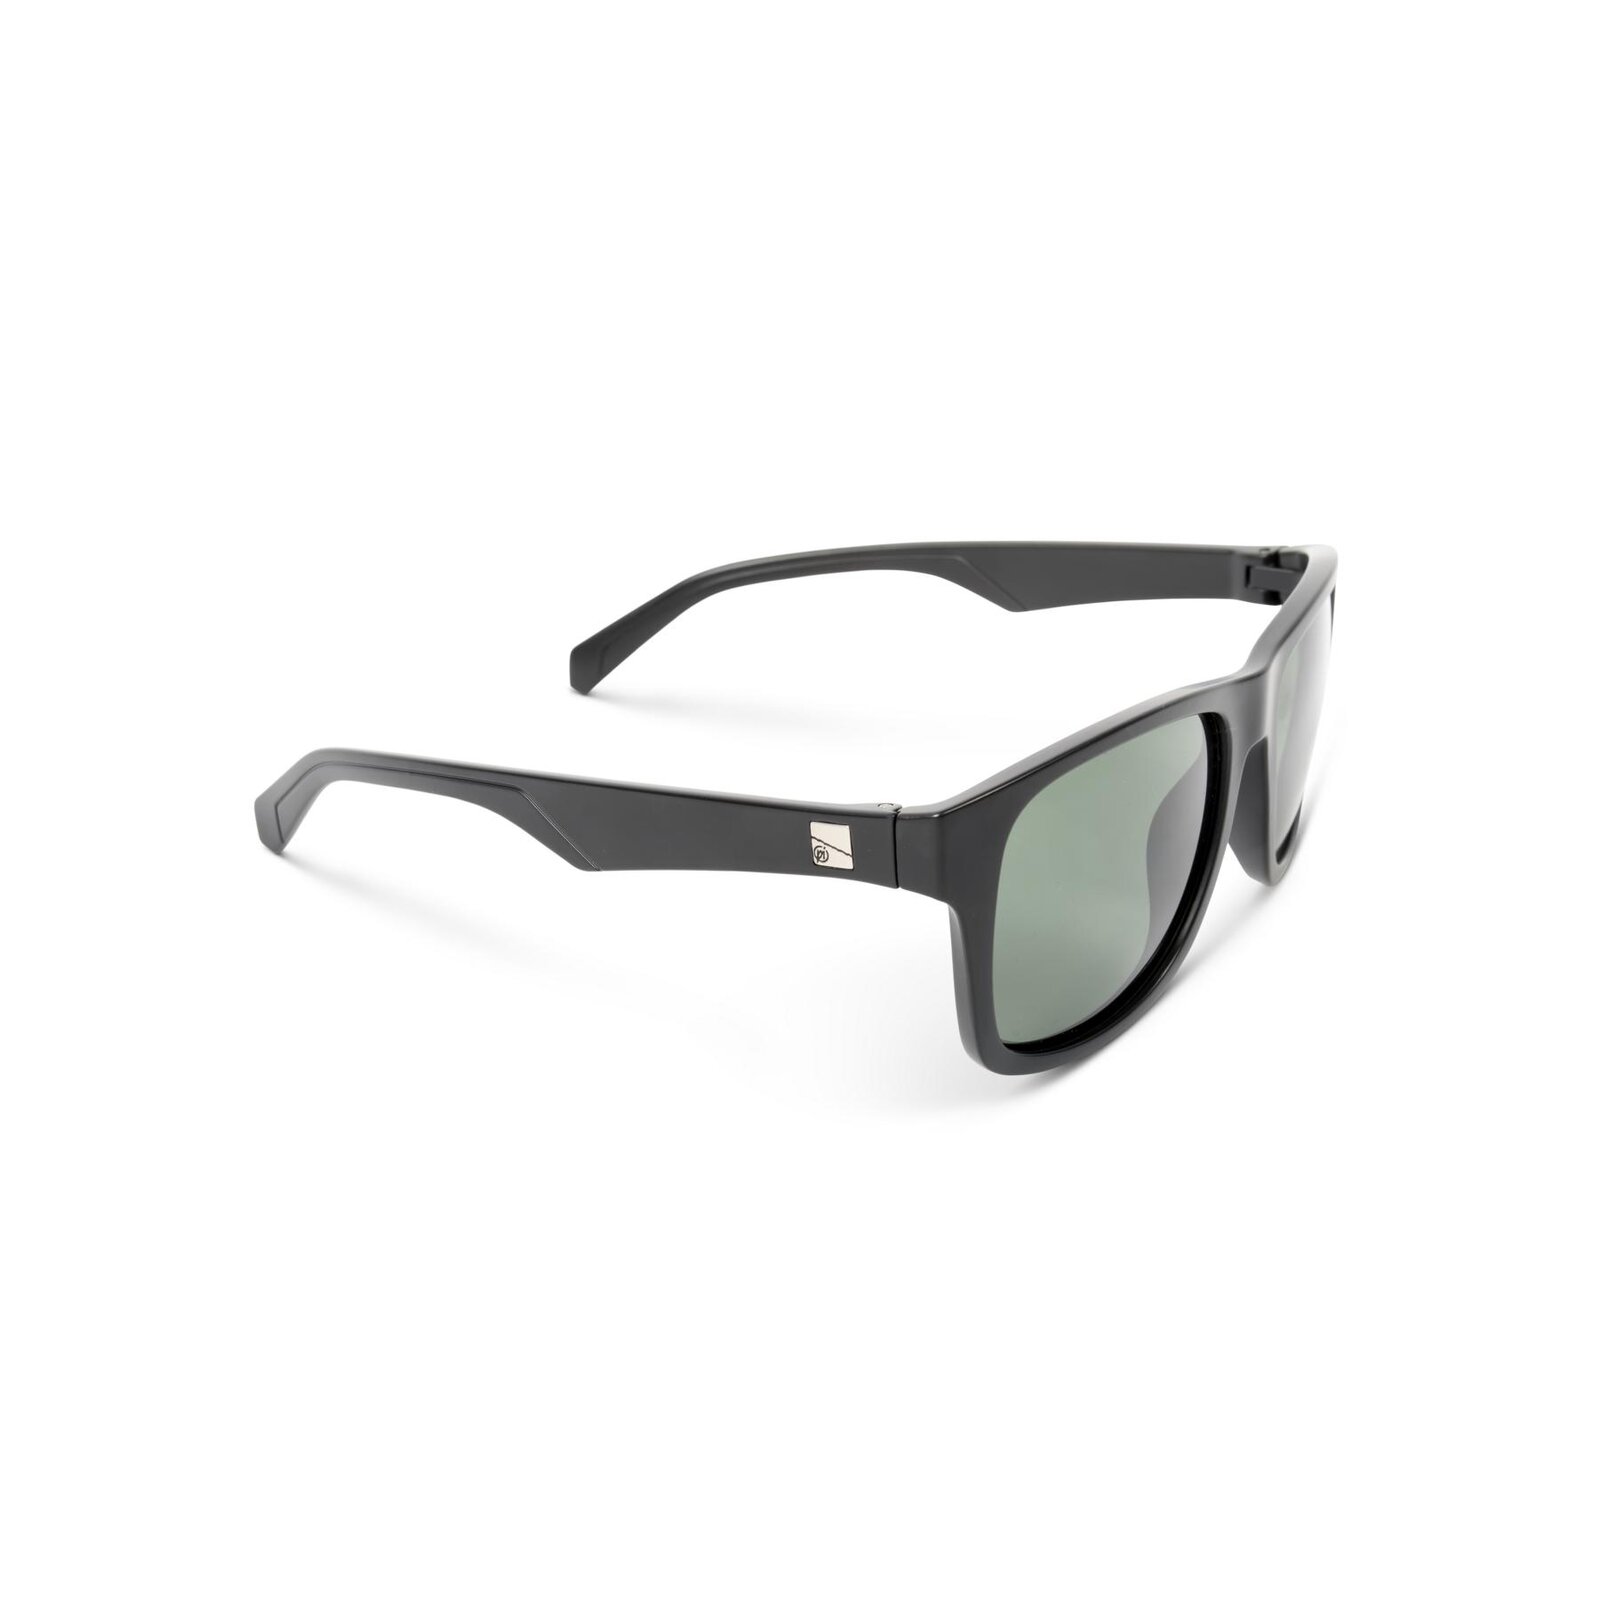 Preston Innovations Inception Leisure Sunglasses - Green Lens